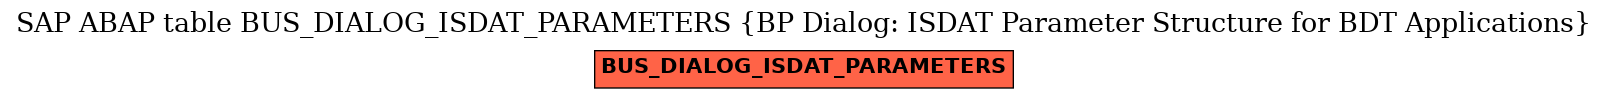 E-R Diagram for table BUS_DIALOG_ISDAT_PARAMETERS (BP Dialog: ISDAT Parameter Structure for BDT Applications)